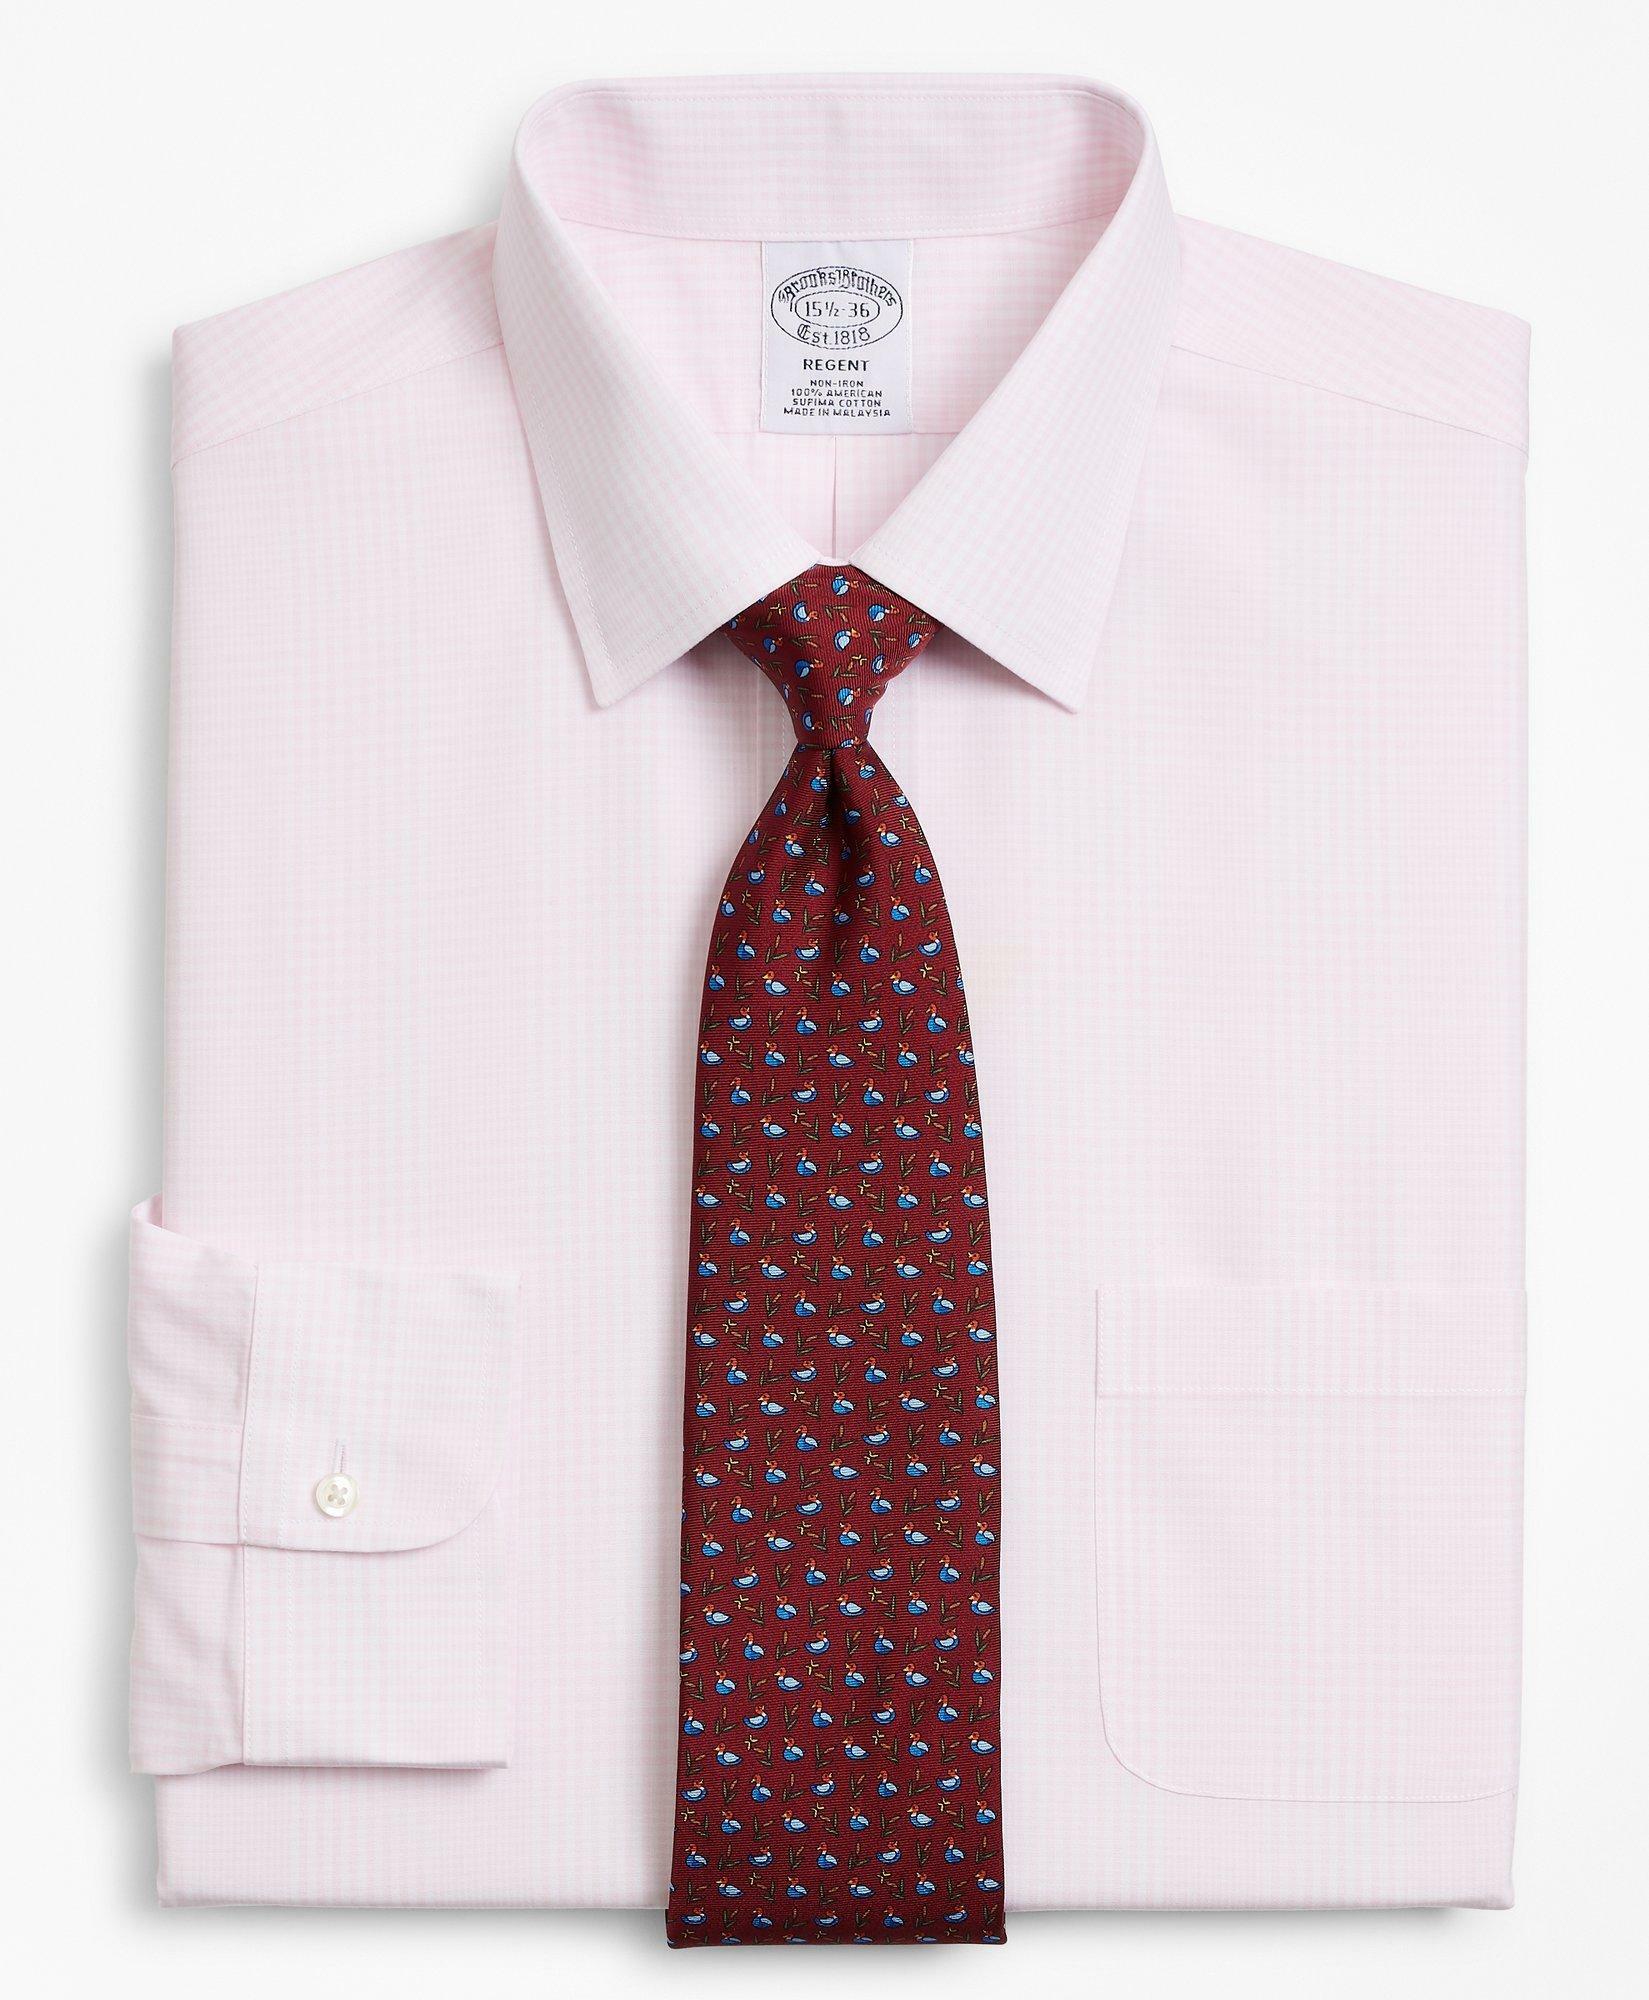 Brooks Brothers Men's Regent Regular-Fit Dress Shirt, Non-Iron Glen Plaid | Pink